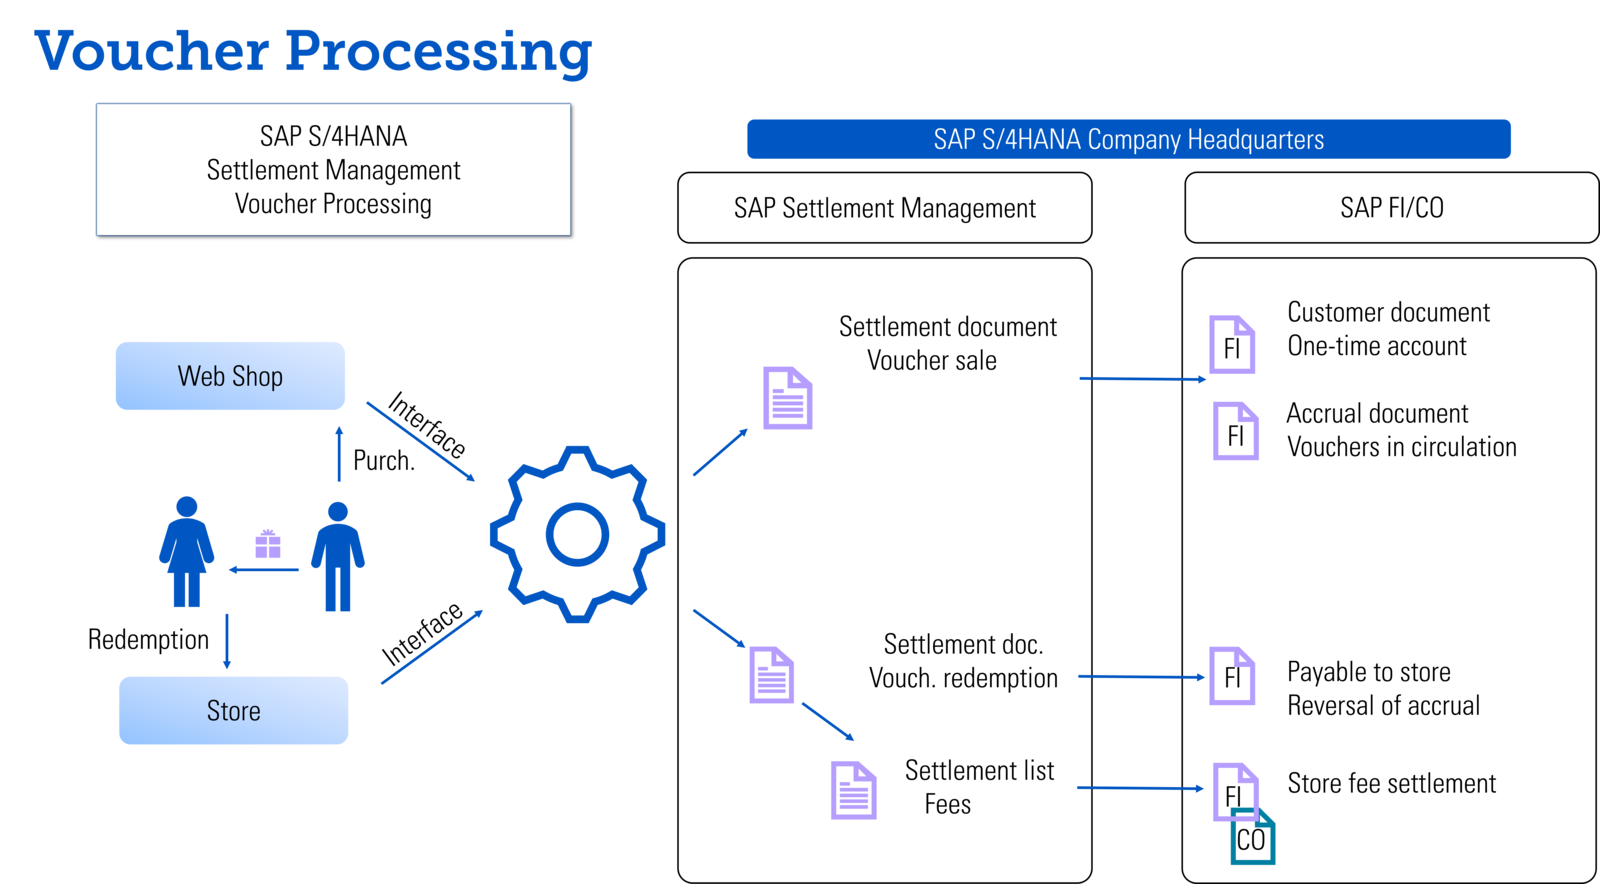 Voucher processing in SAP S/4HANA